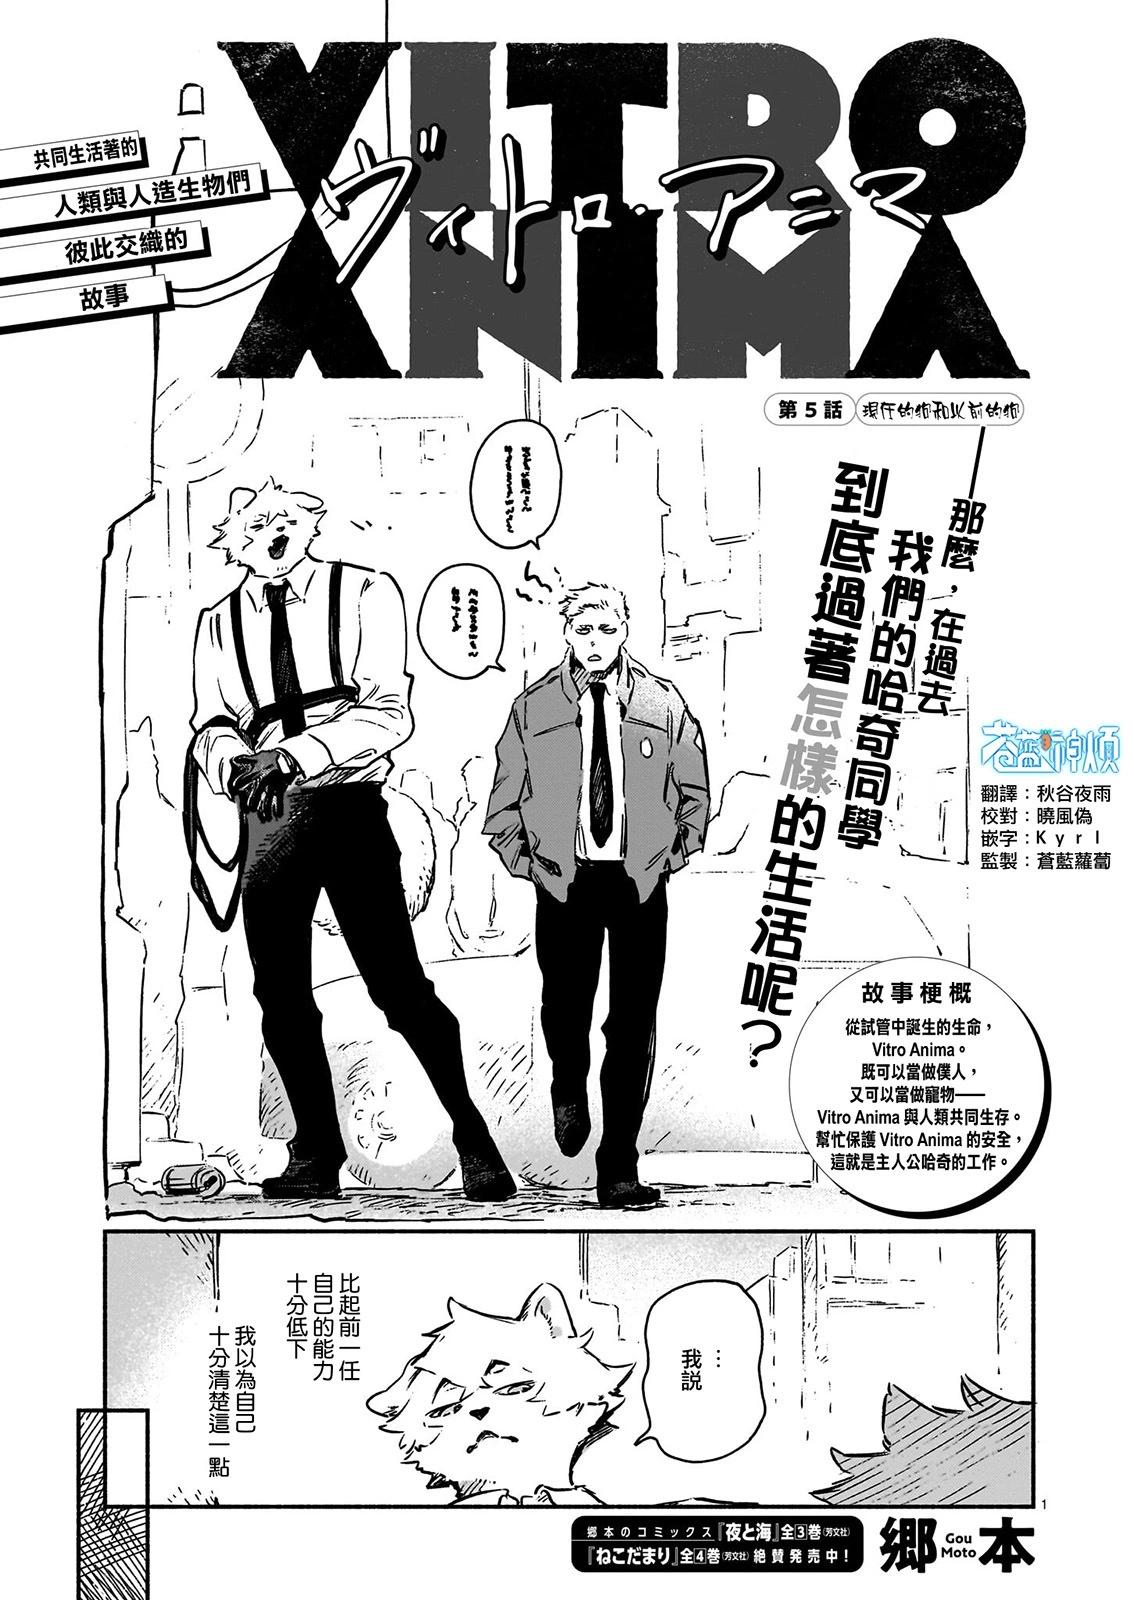 Vitro Anima - 第05話 - 1